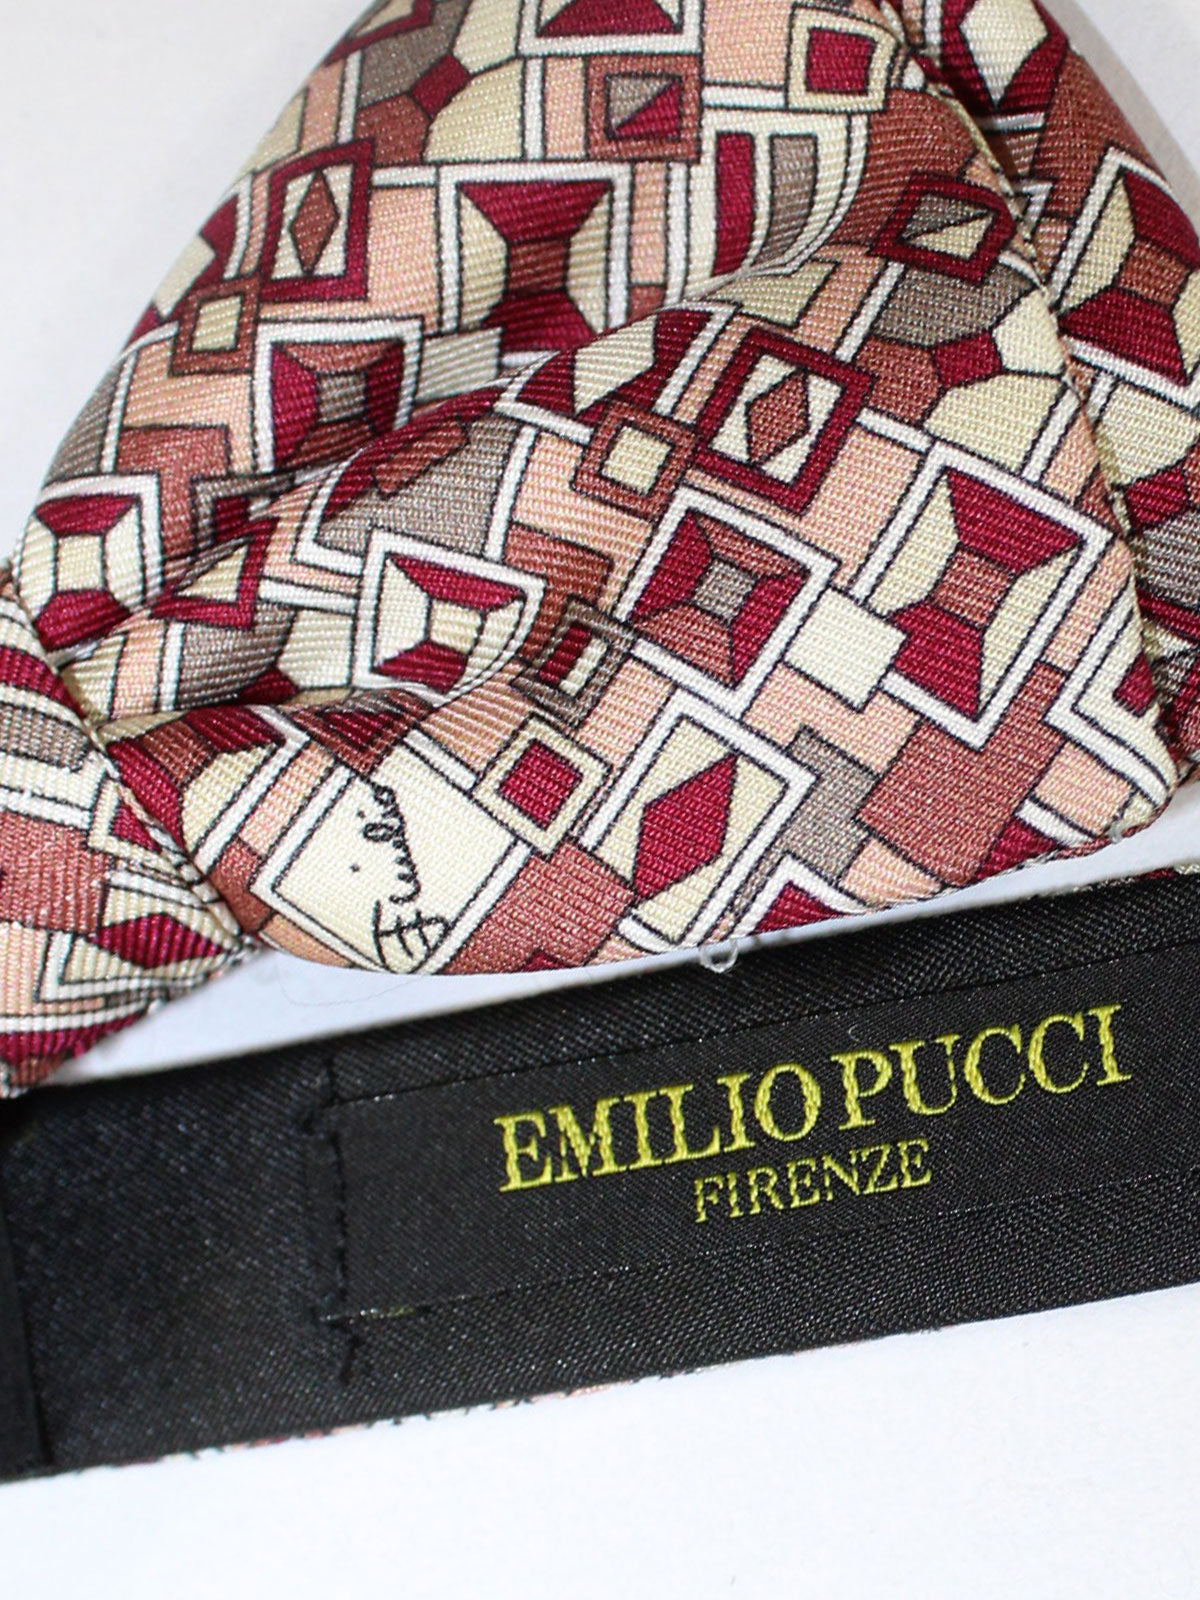 EMILIO PUCCI cotton signature tee shirt, top, Sz M pinks/yellow